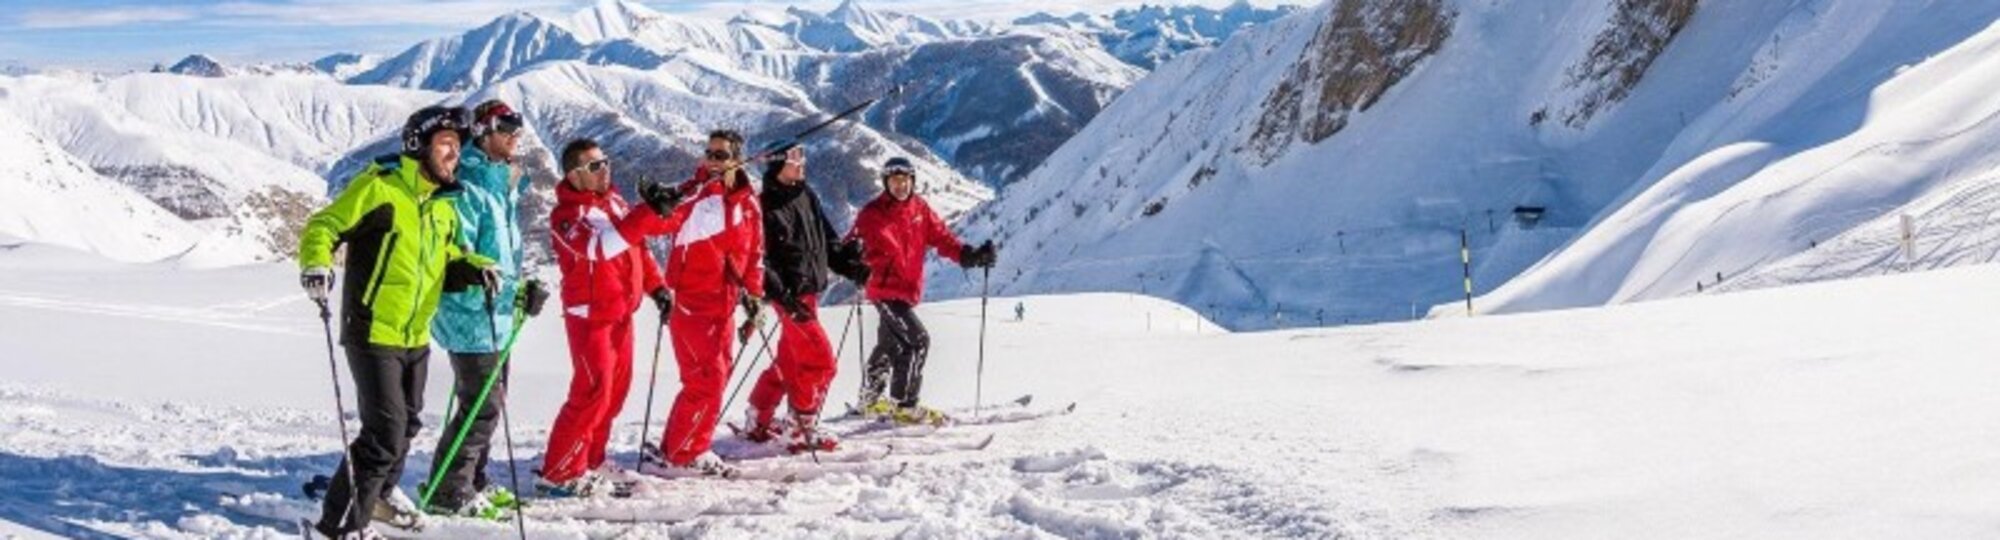 ESF Instructors in a ski lesson